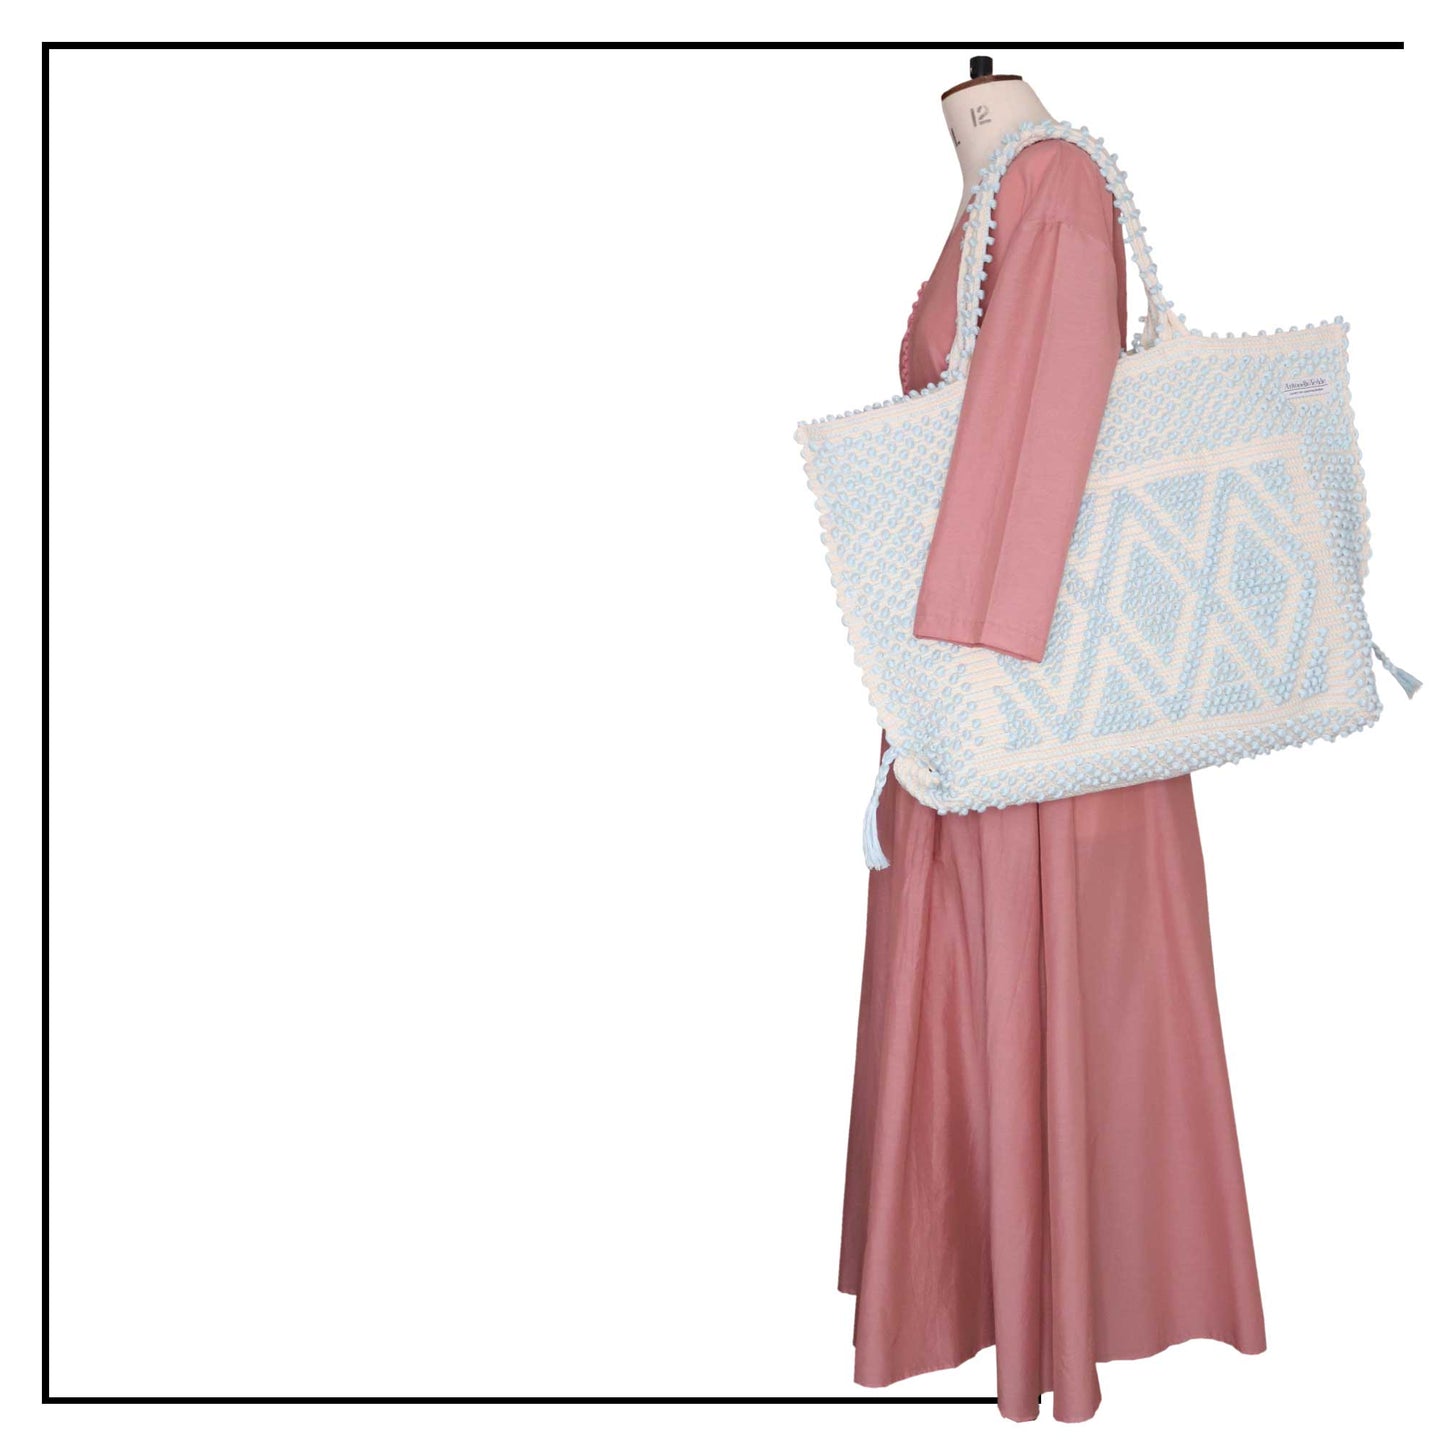 Capriccioli Large Tote - Sustainable handwoven large tote fashion handbag - LIGHT GREY with CREAM bag